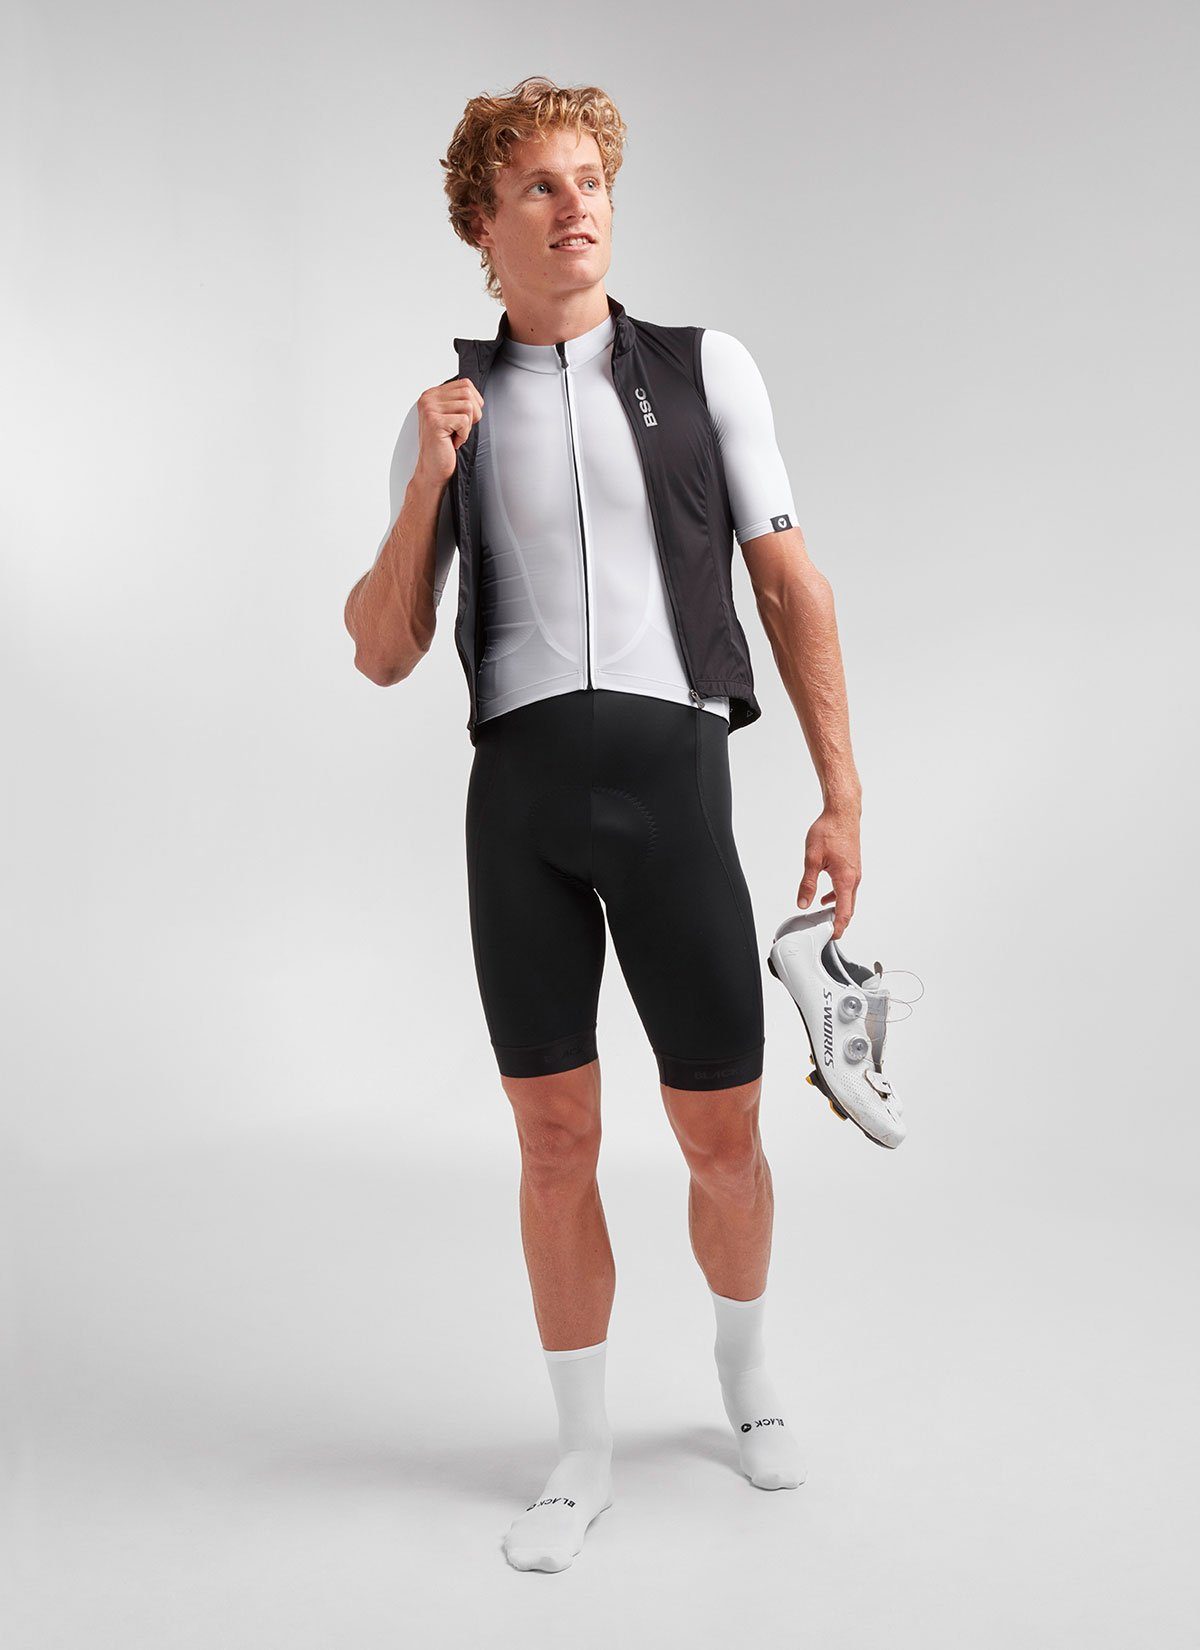 Black Sheep Cycling Essentials TEAM Vest Black | CYCLISM